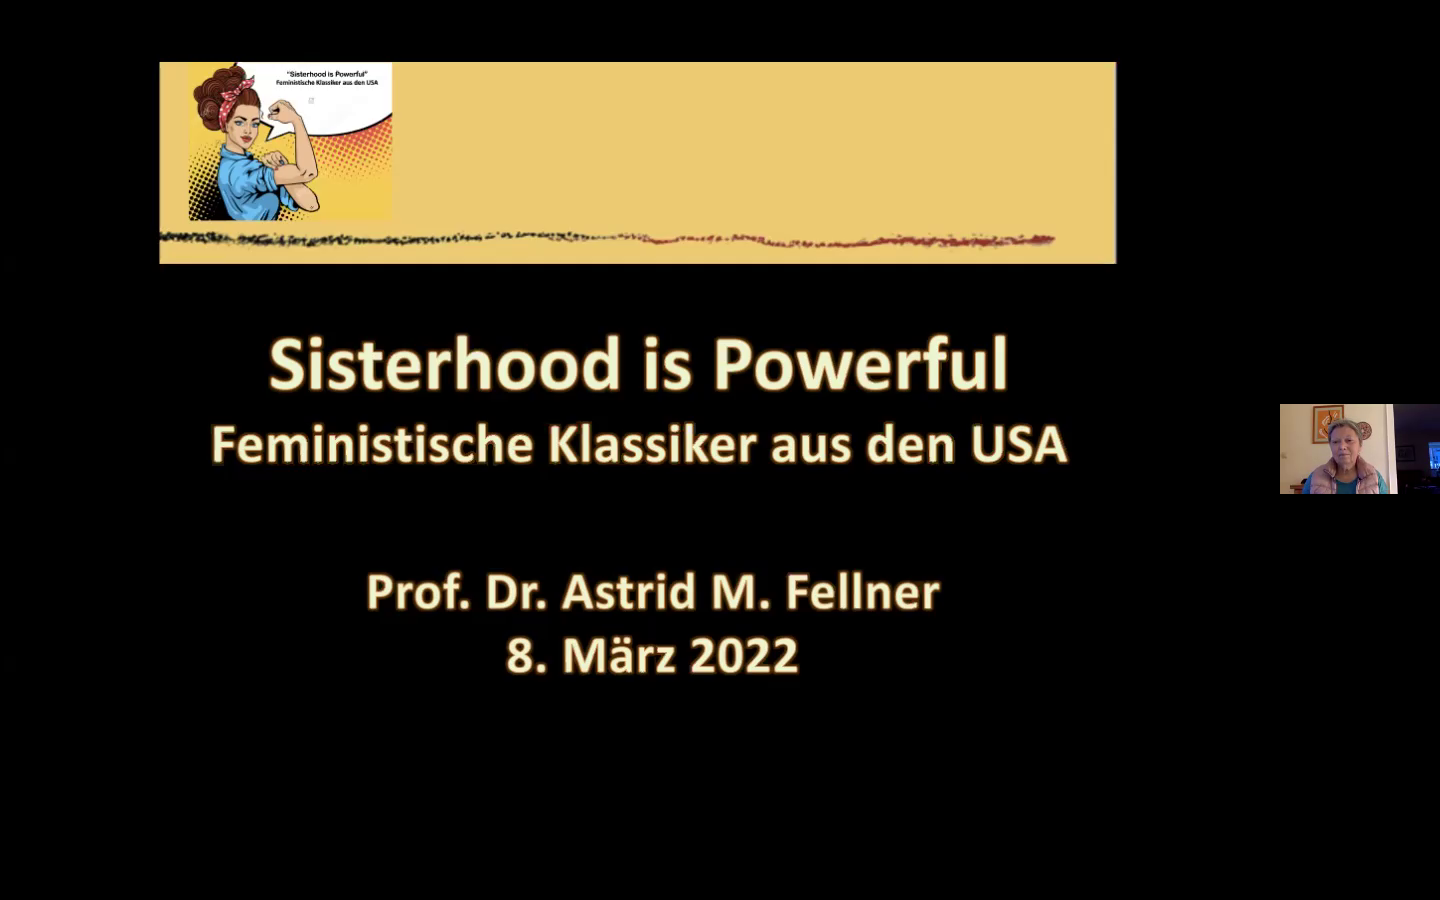 Sisterhood is powerful : Feministische Klassiker aus den USA